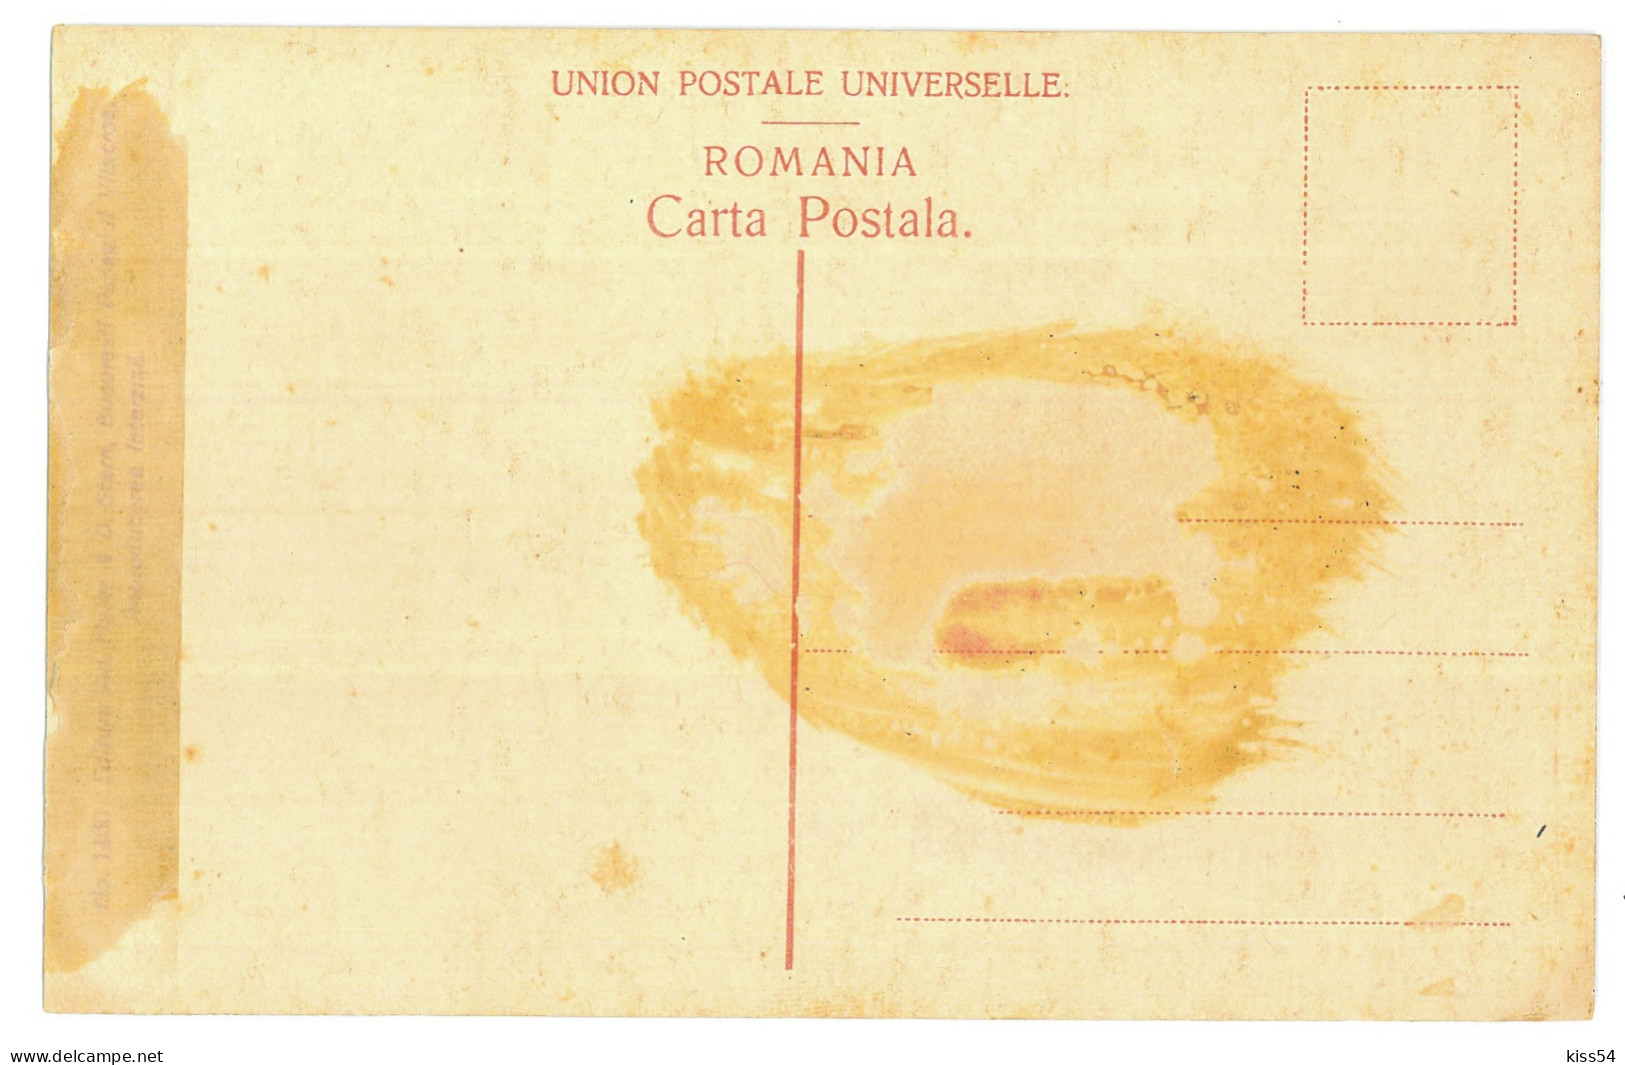 RO 77 - 22348 SINAIA, Prahova, PELES Castle, Romania - Old Postcard - Unused  - Rumänien